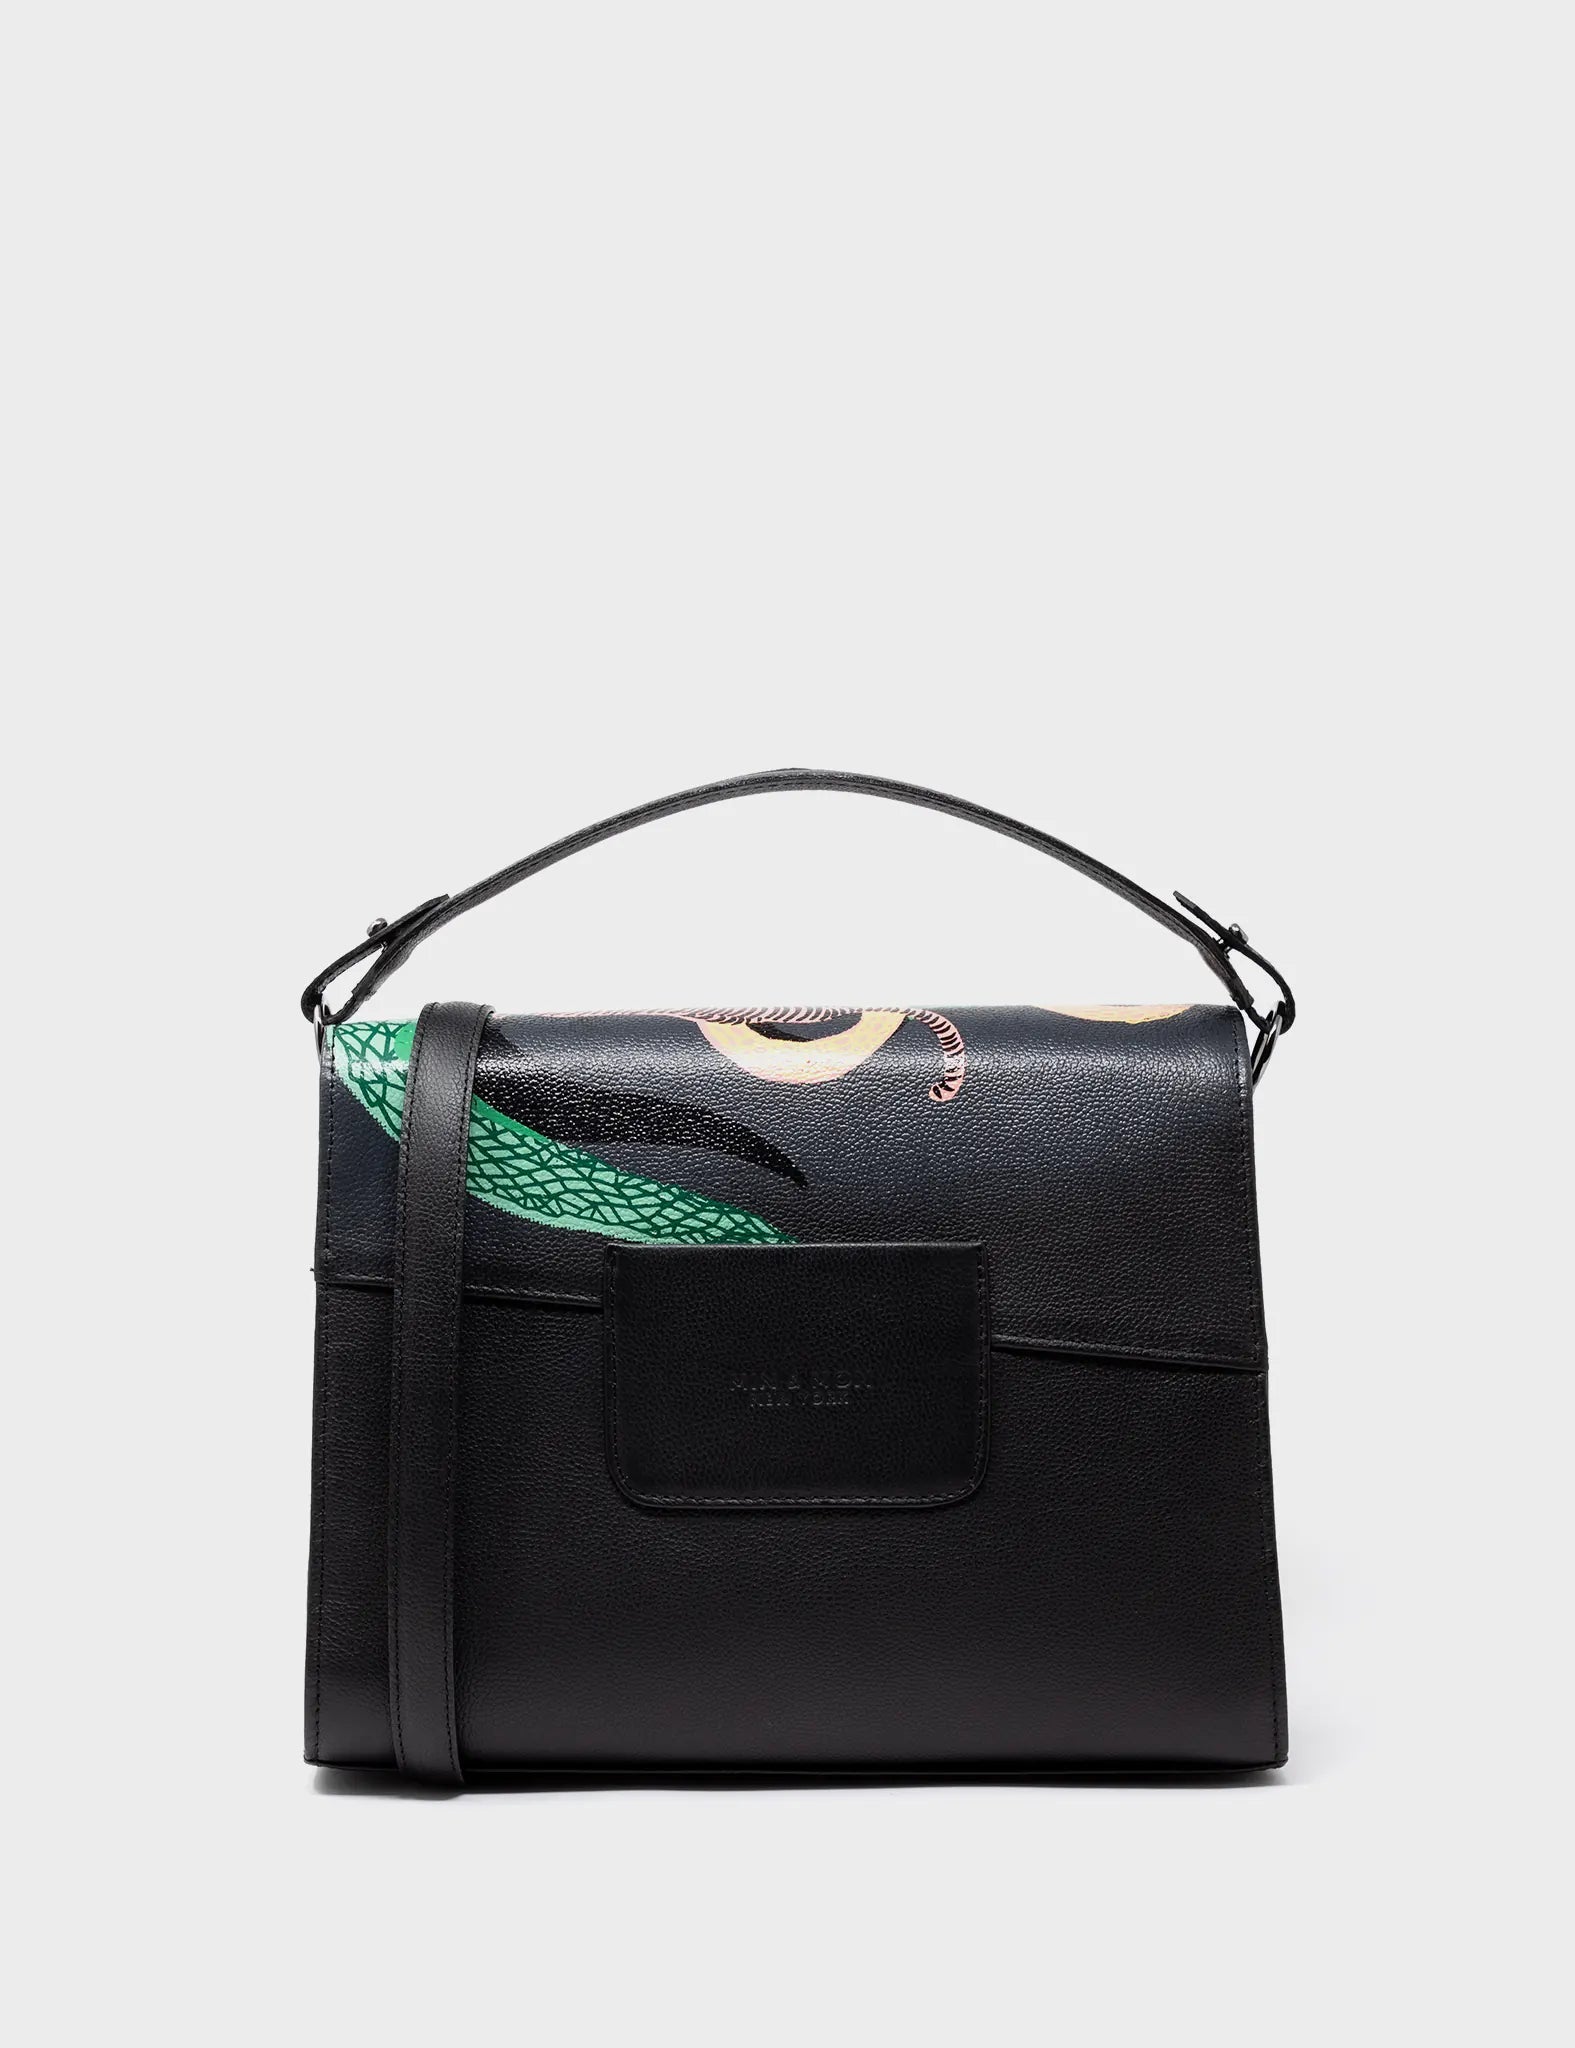 Medium Crossbody Handbag Black Leather - Tiger And Snake Print - Back view